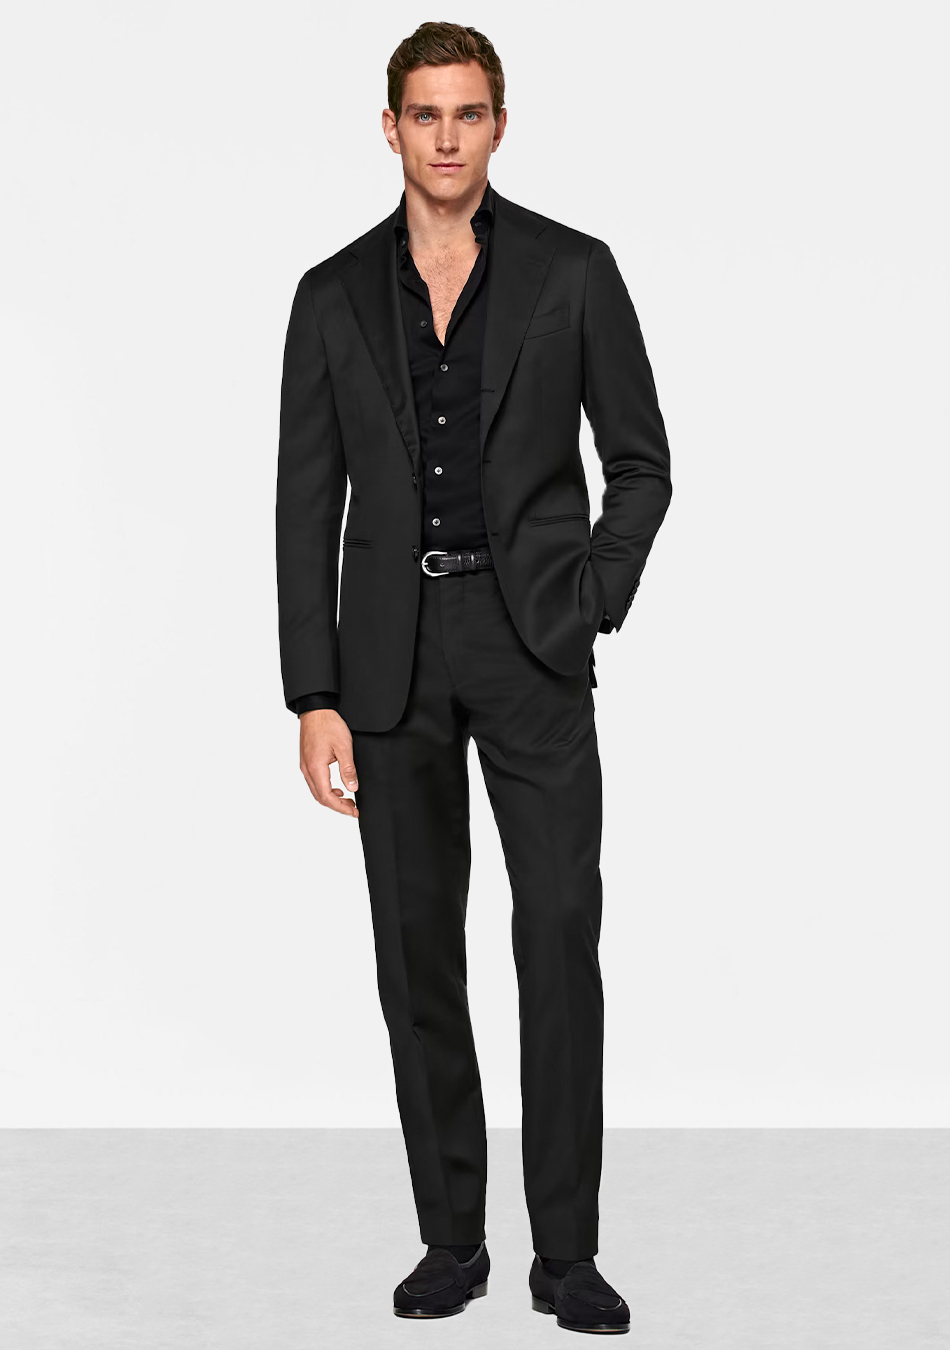 Black suit, black dress shirt, and black loafers